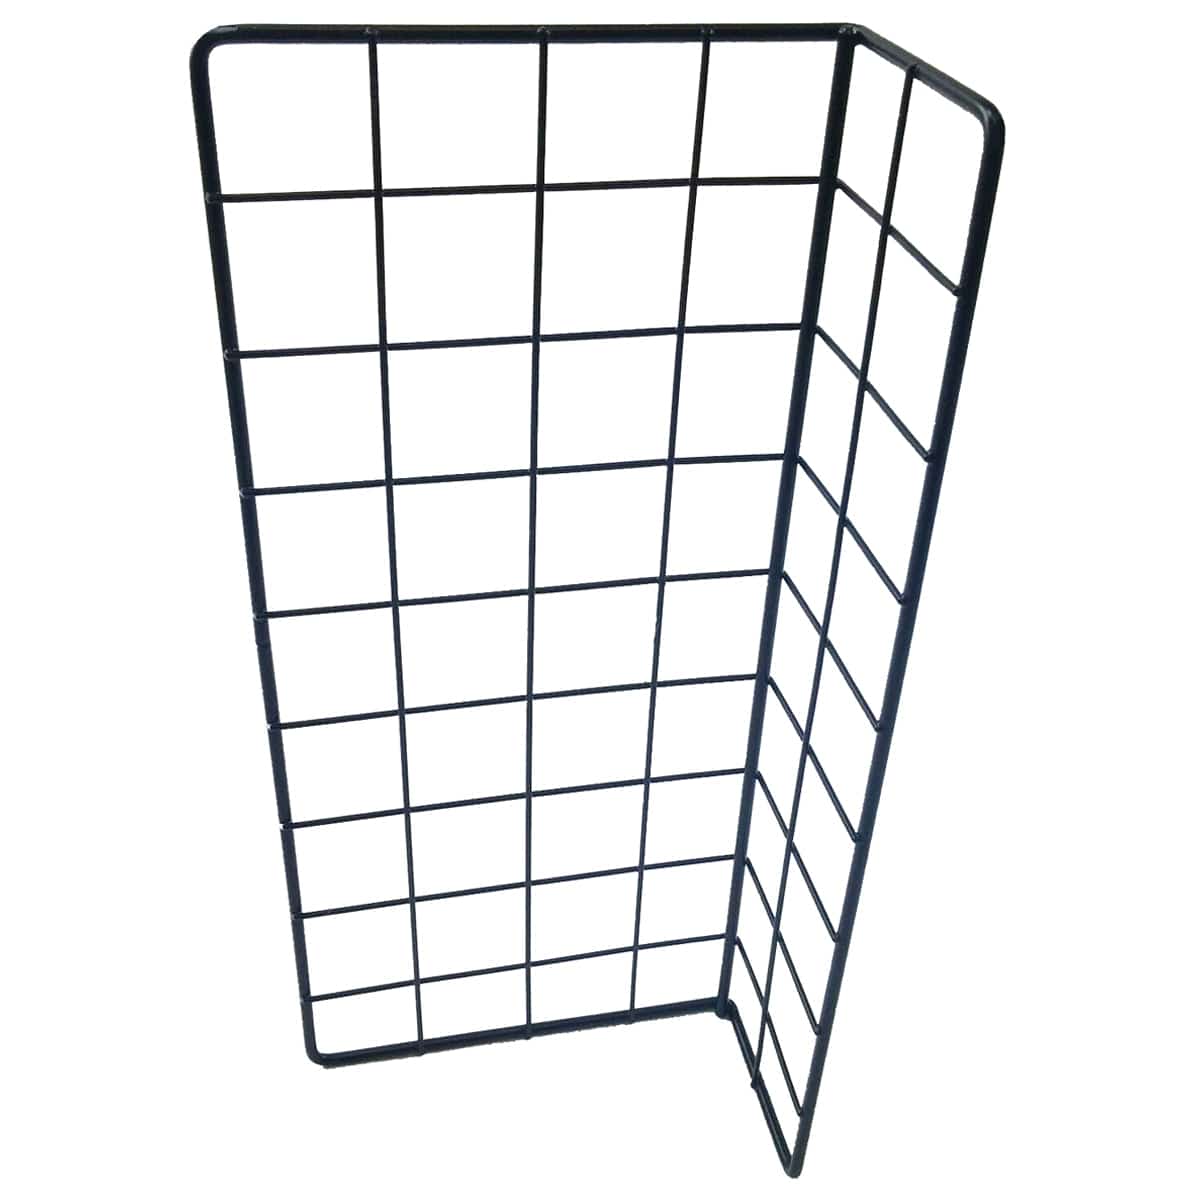 Black ledge grid for C&C guinea pig cages